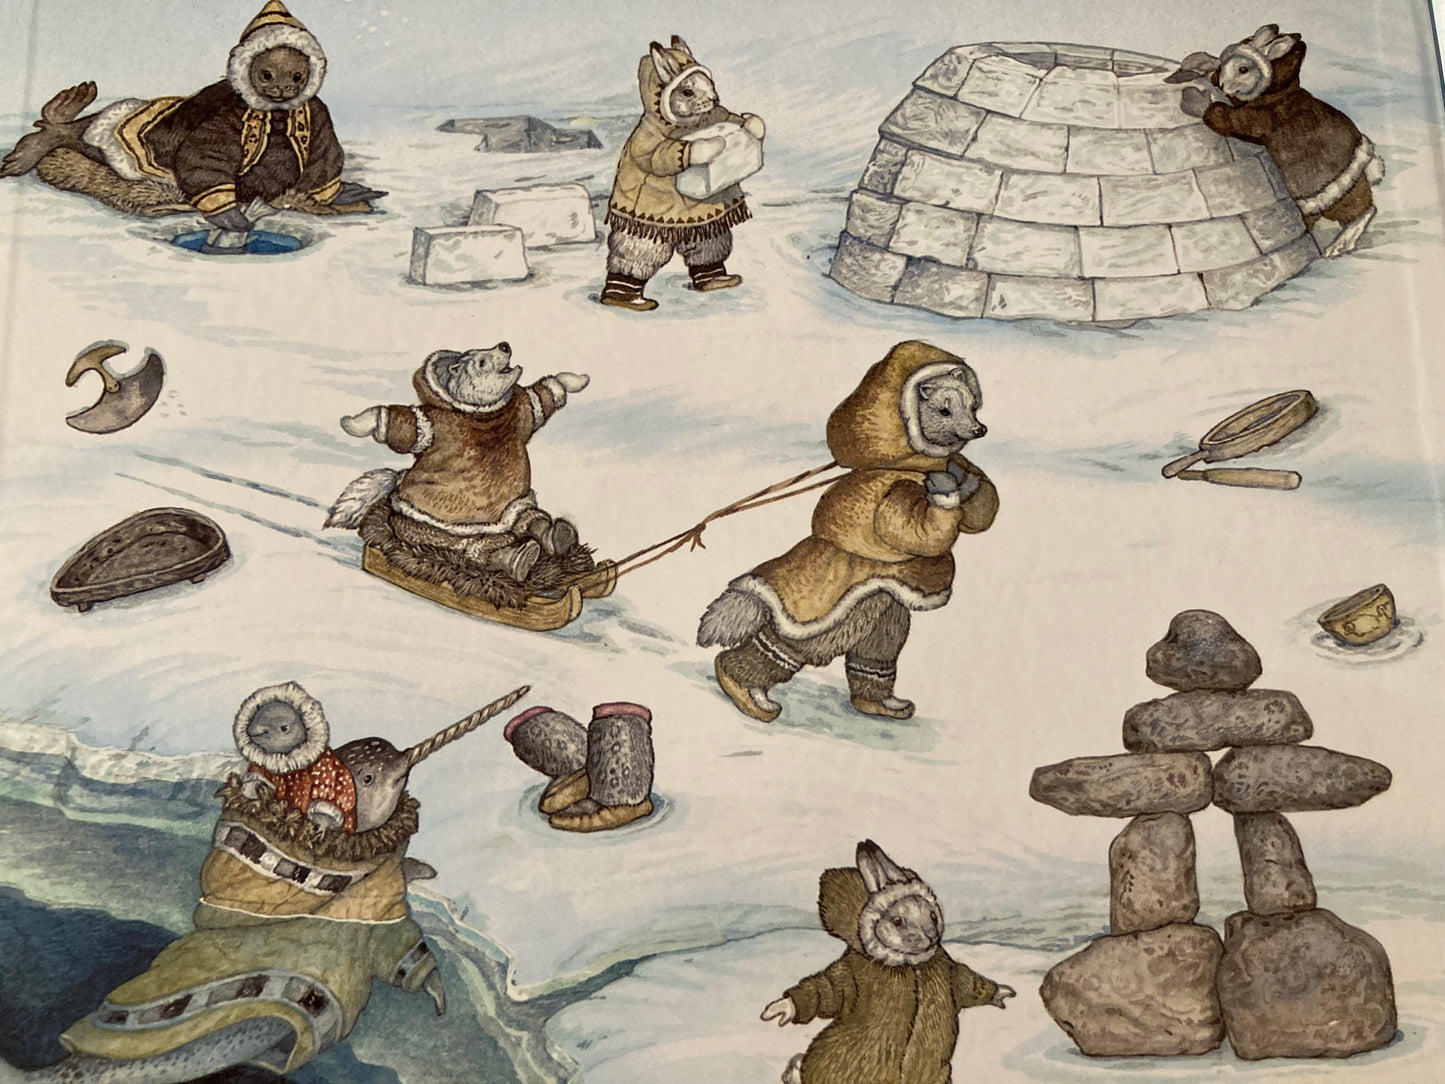 Children’s Picture Book - Jan Brett's THE THREE SNOW BEARS